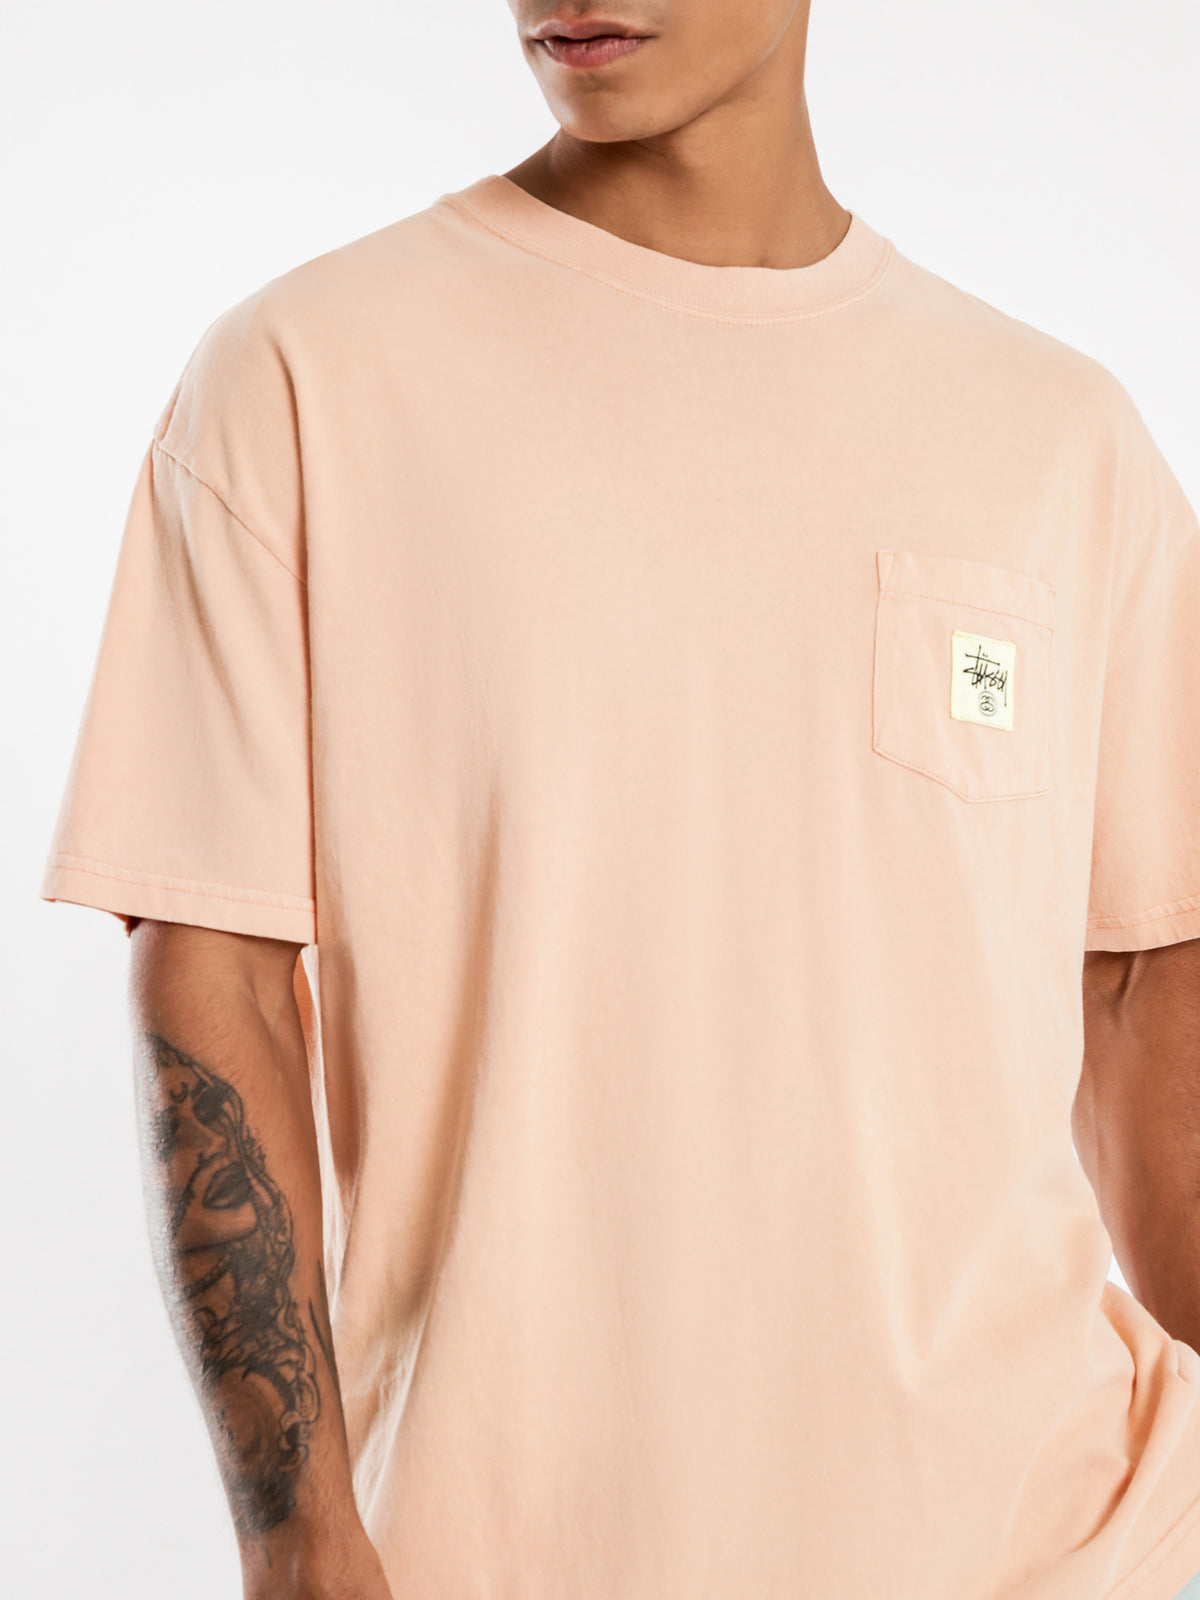 Graffiti Link Pocket Short Sleeve T-Shirt in Apricot